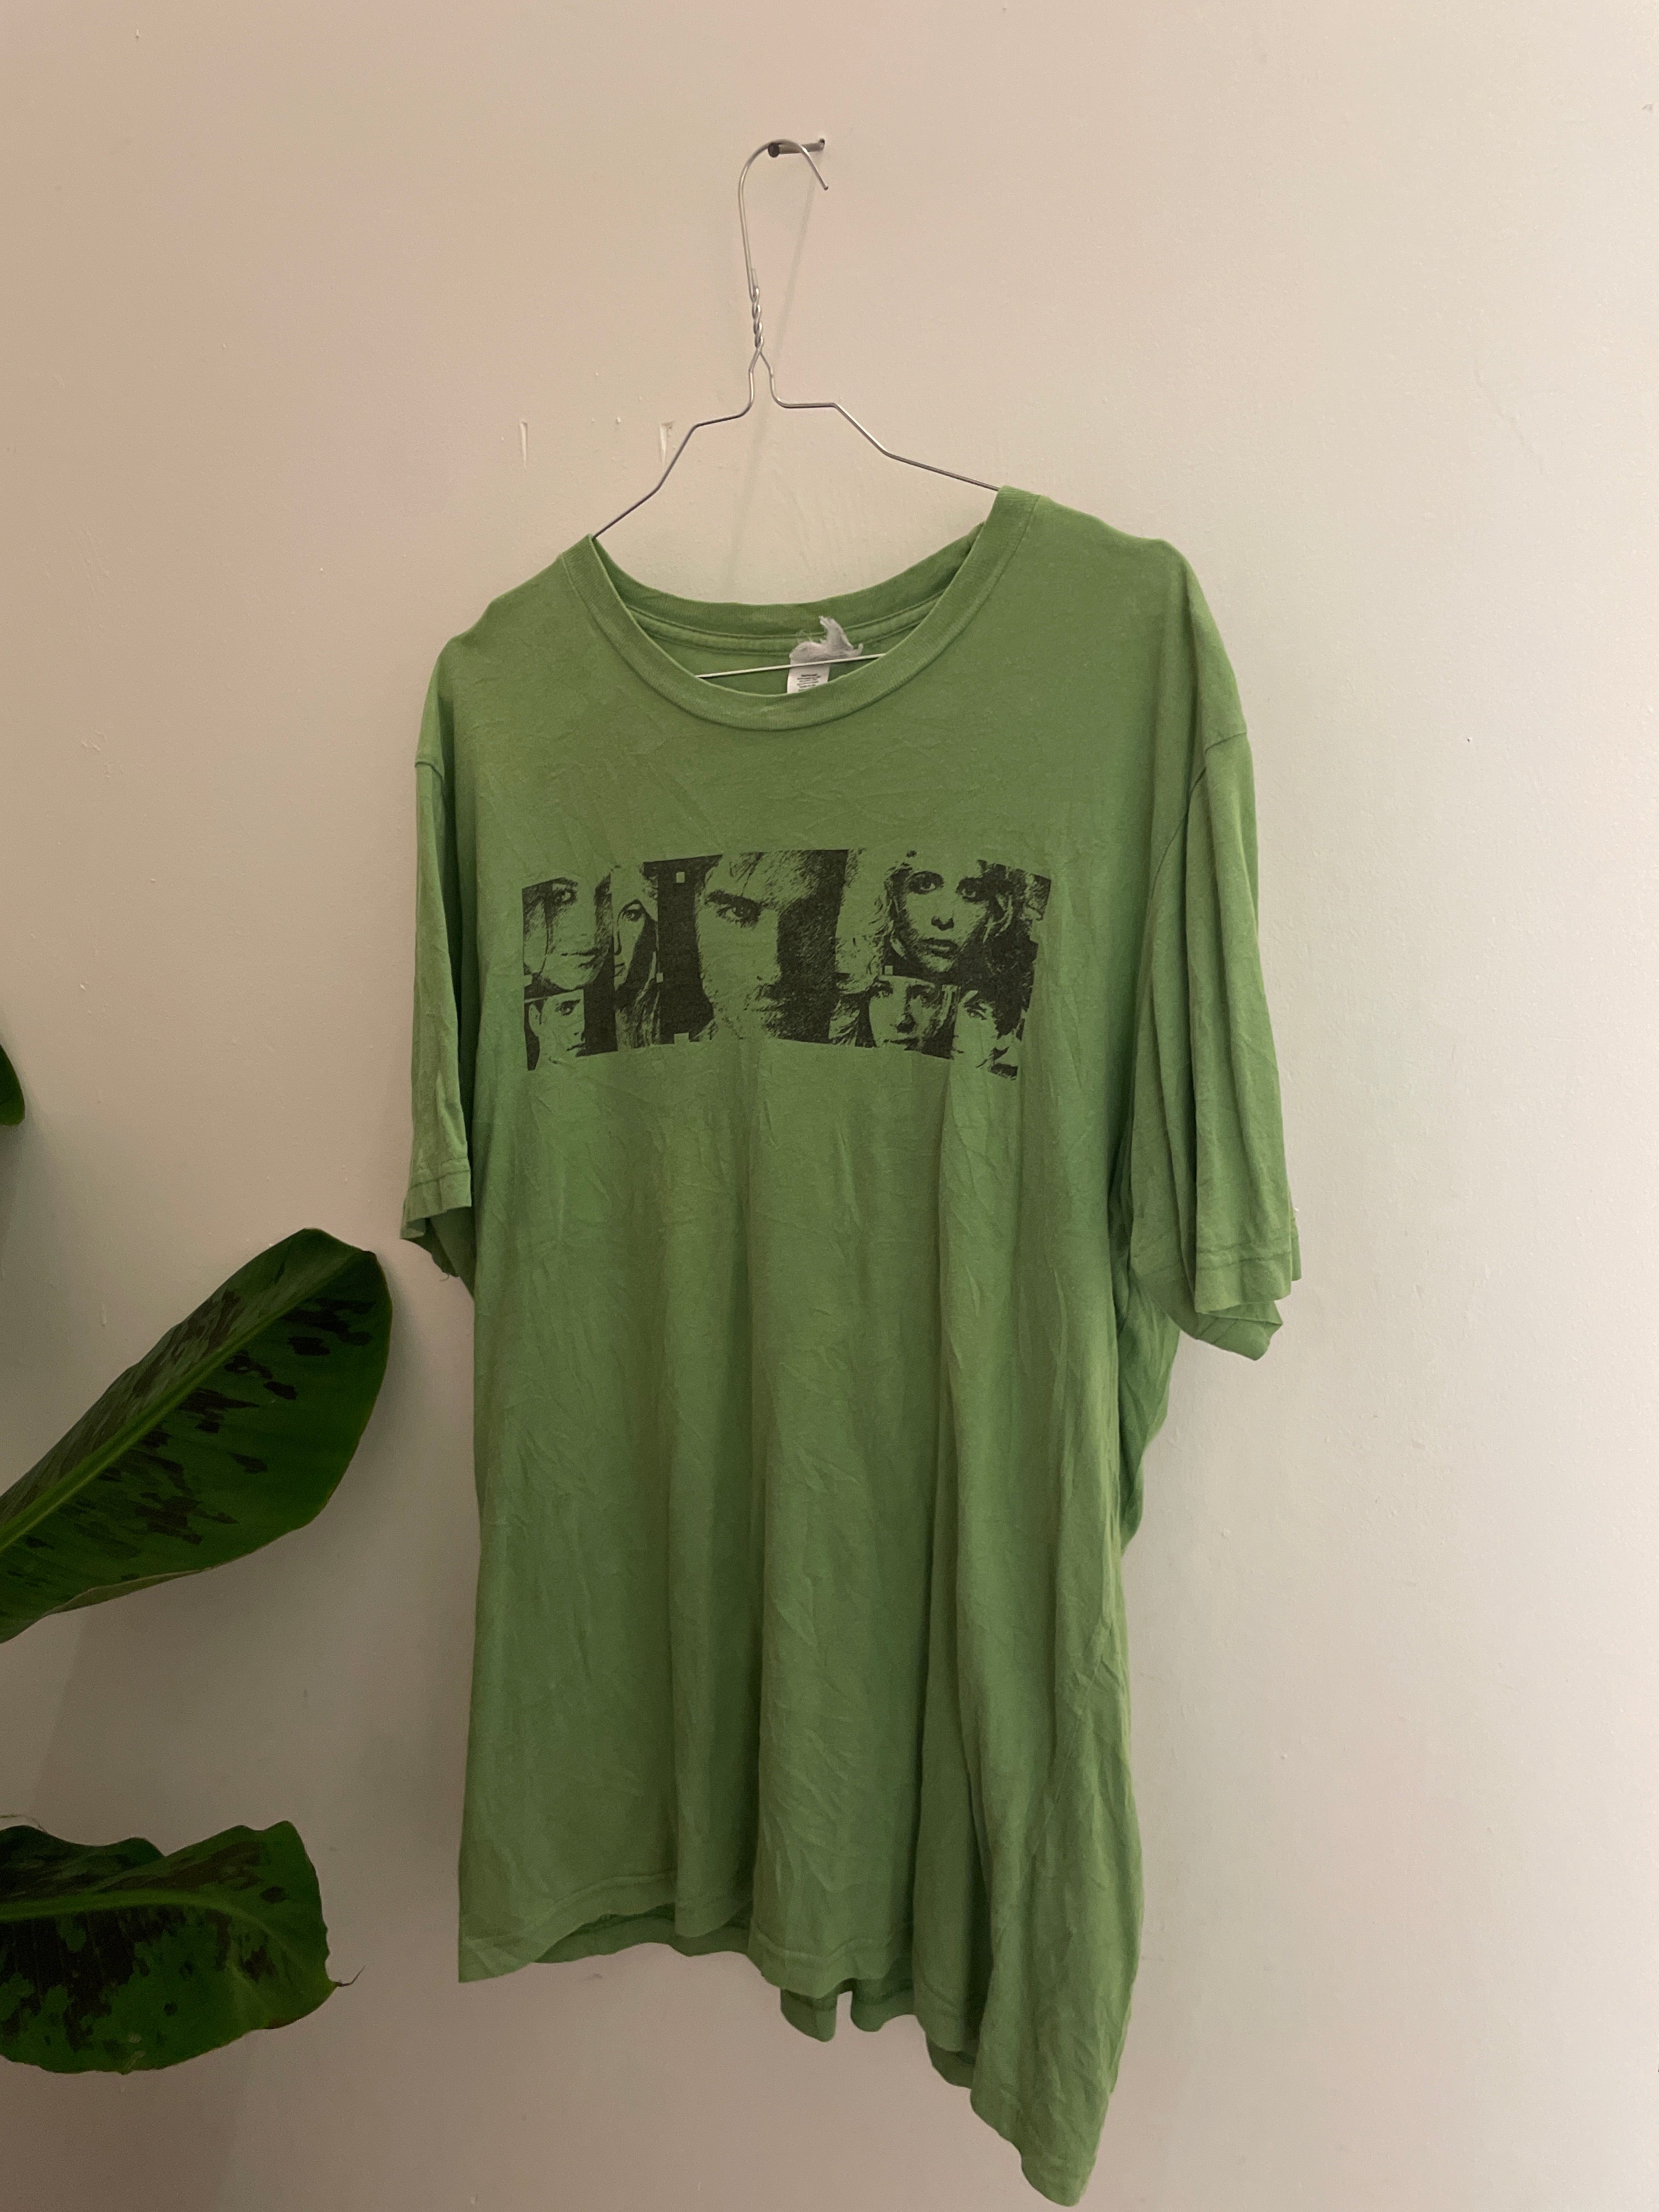 Vintage green graphics tshirt size XL